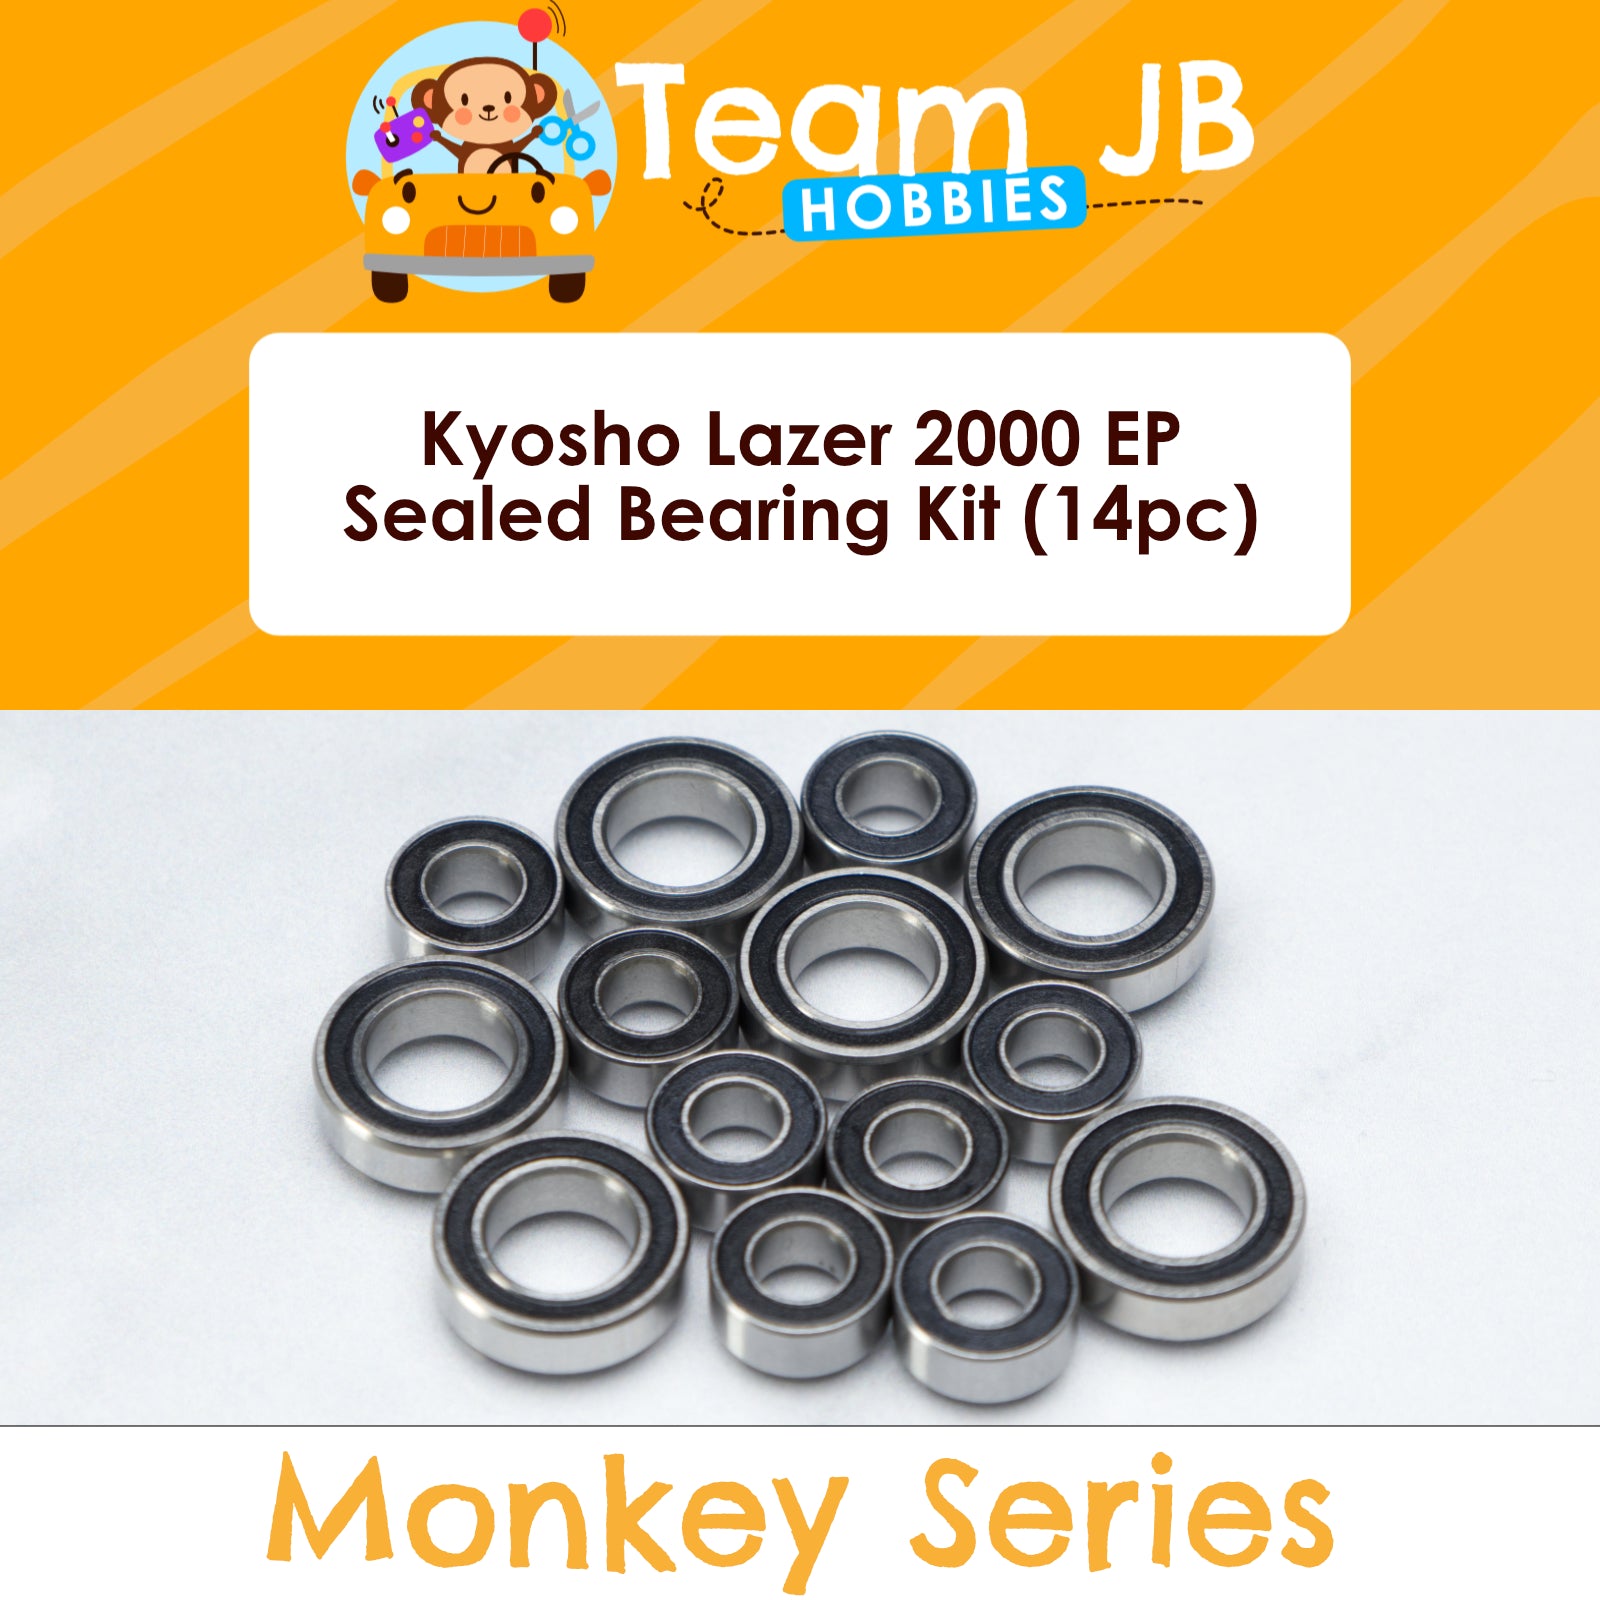 Kyosho Lazer 2000 EP - Sealed Bearing Kit